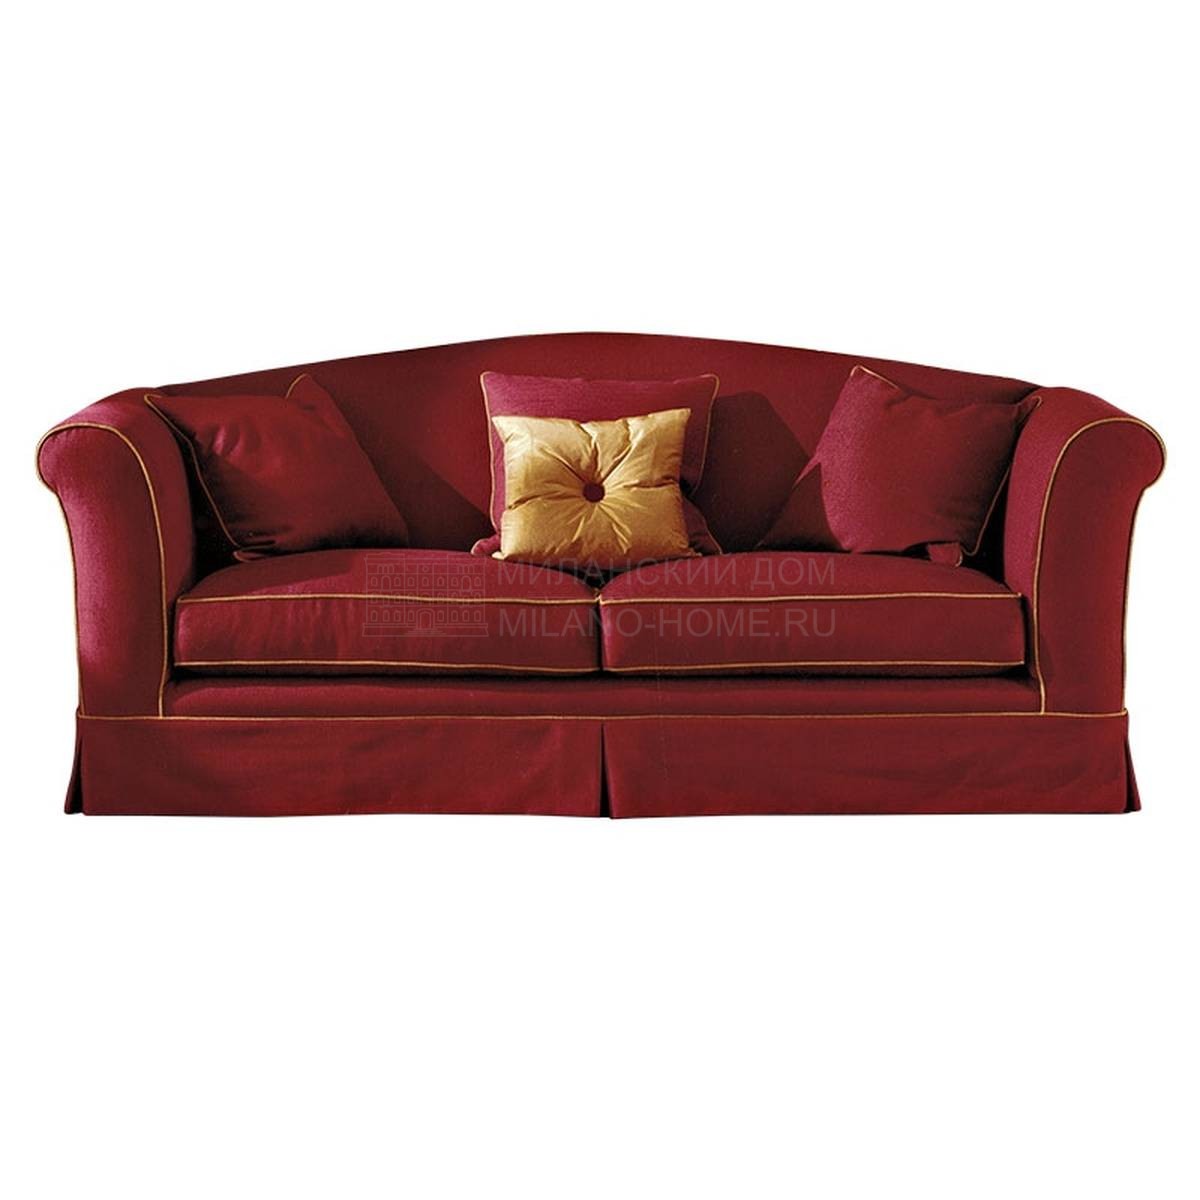 Прямой диван Carlabruna/ sofa из Италии фабрики SOFTHOUSE